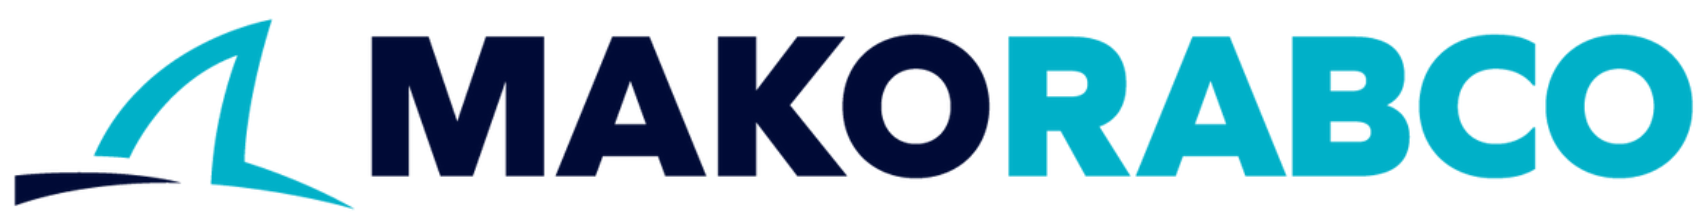 Mako Rabco logo